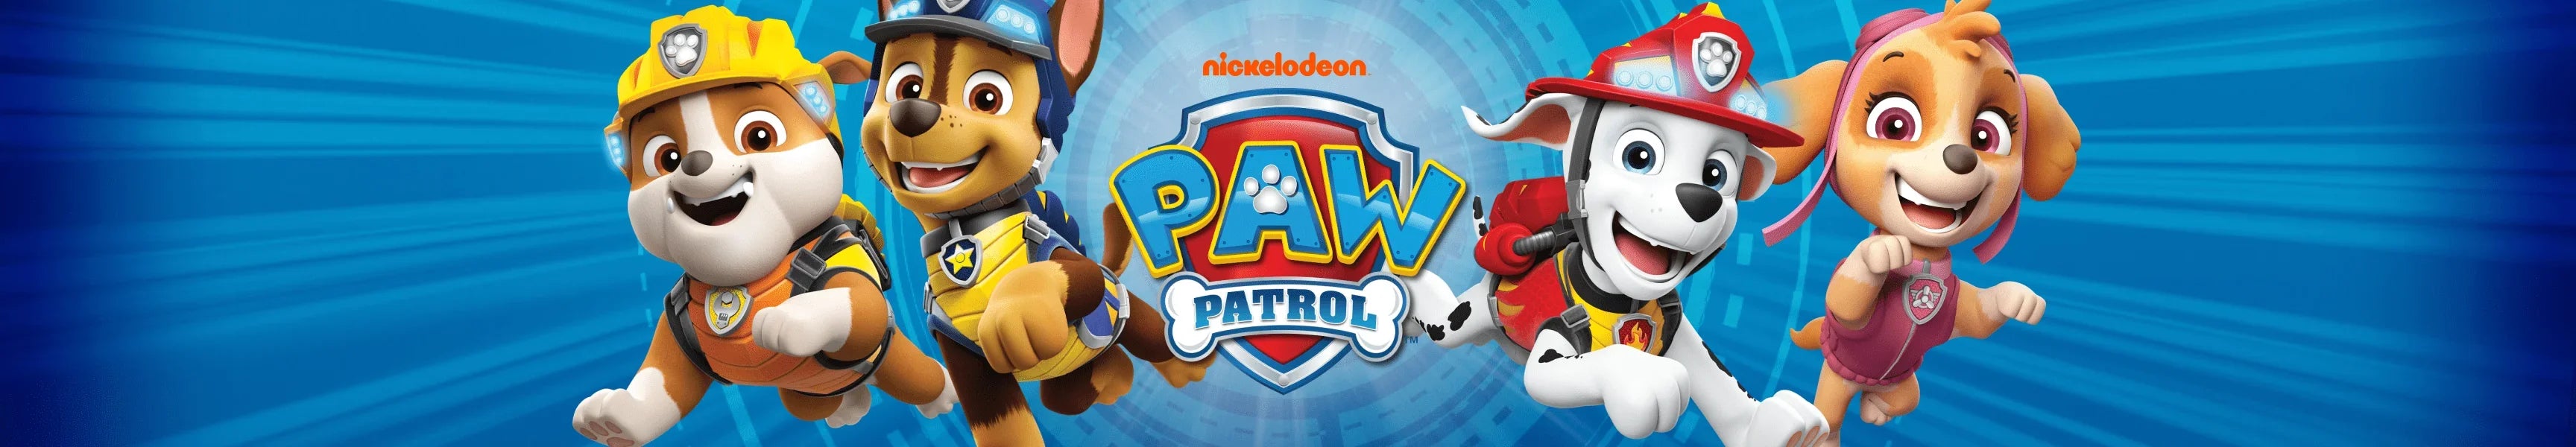 PAW Patrol Holiday